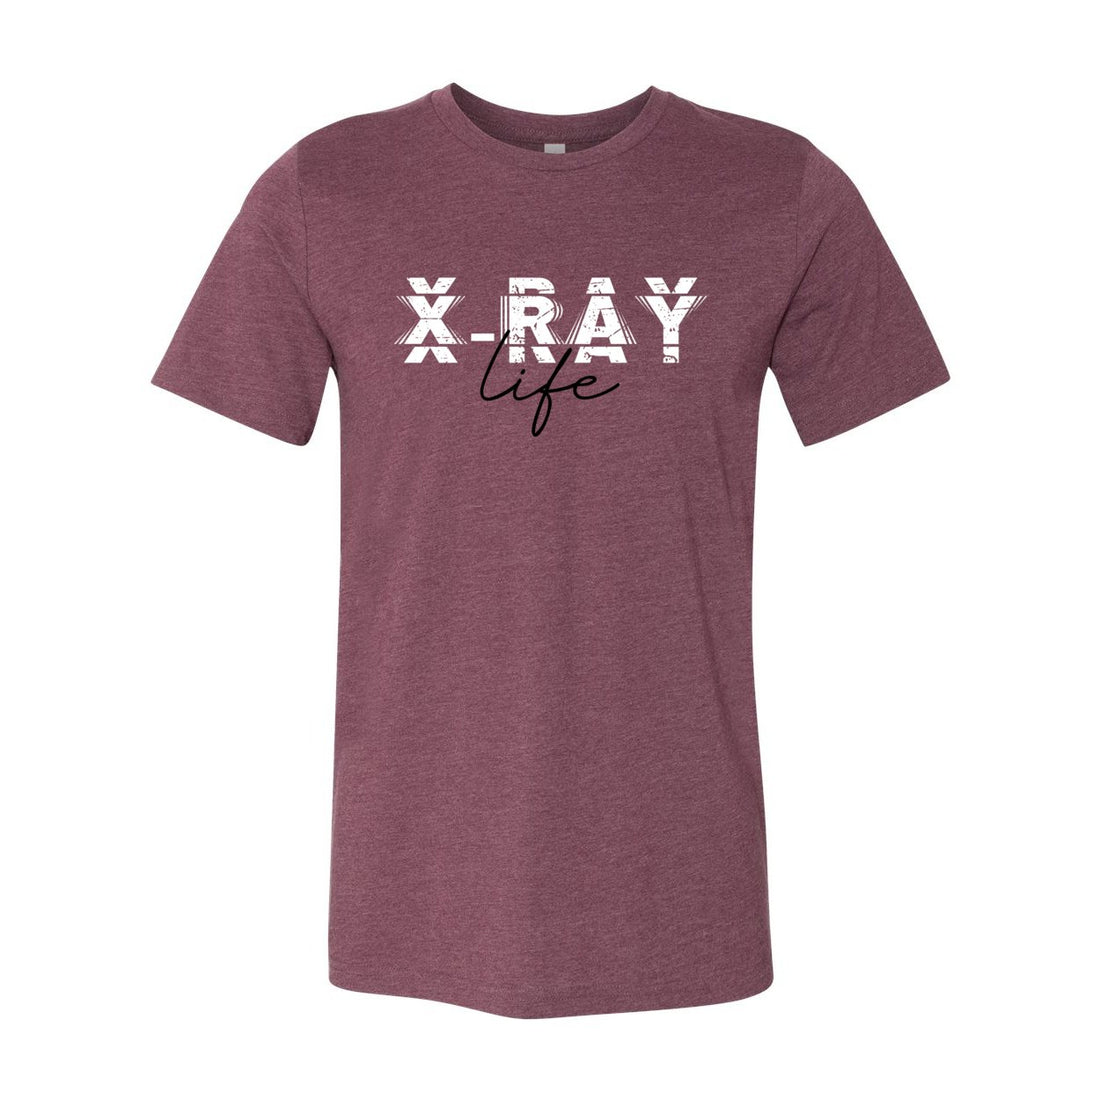 X-Ray Life Short Sleeve Jersey Tee - T-Shirts - Positively Sassy - X-Ray Life Short Sleeve Jersey Tee